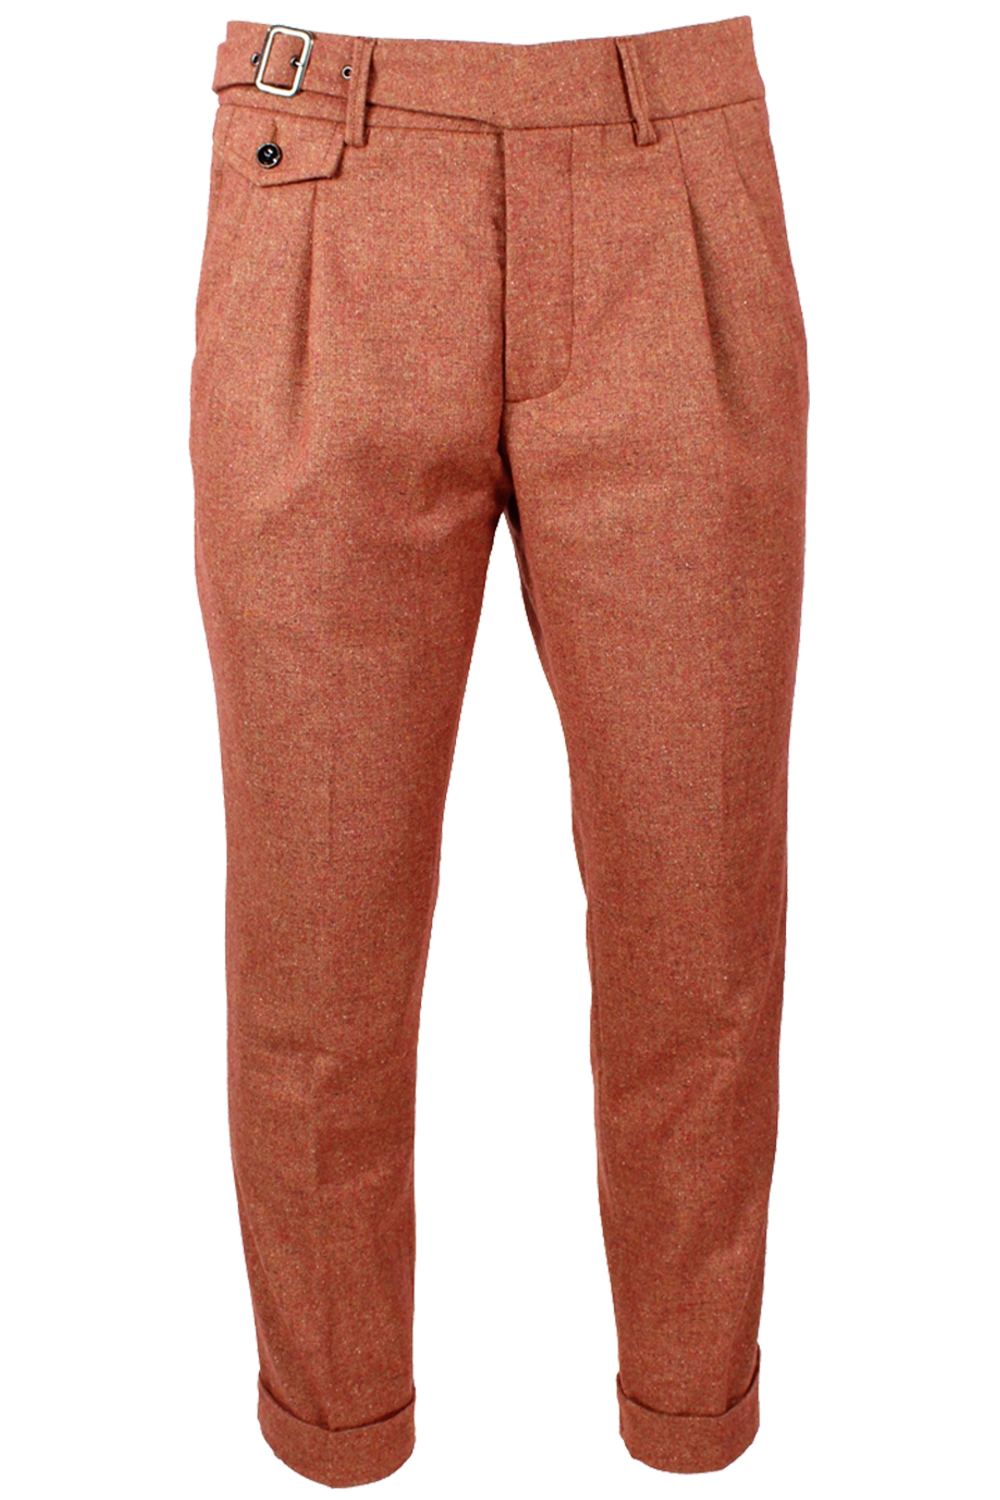 Pantalone con due pinces in lana coccio